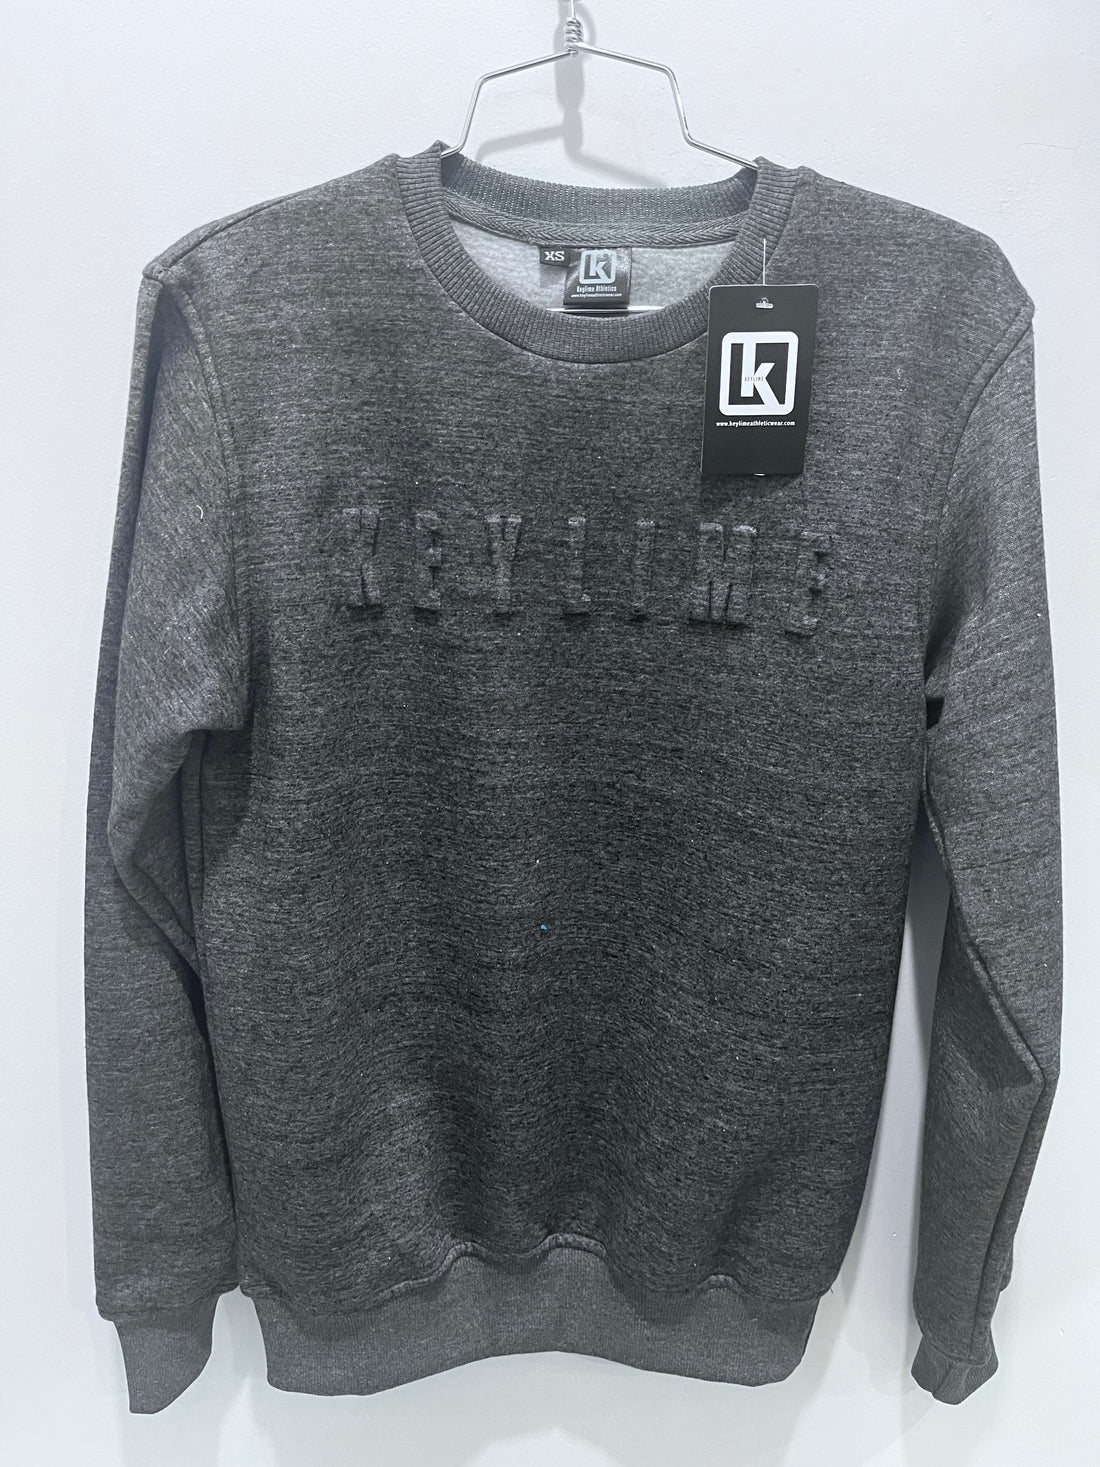 KEYLIME crewneck sweater